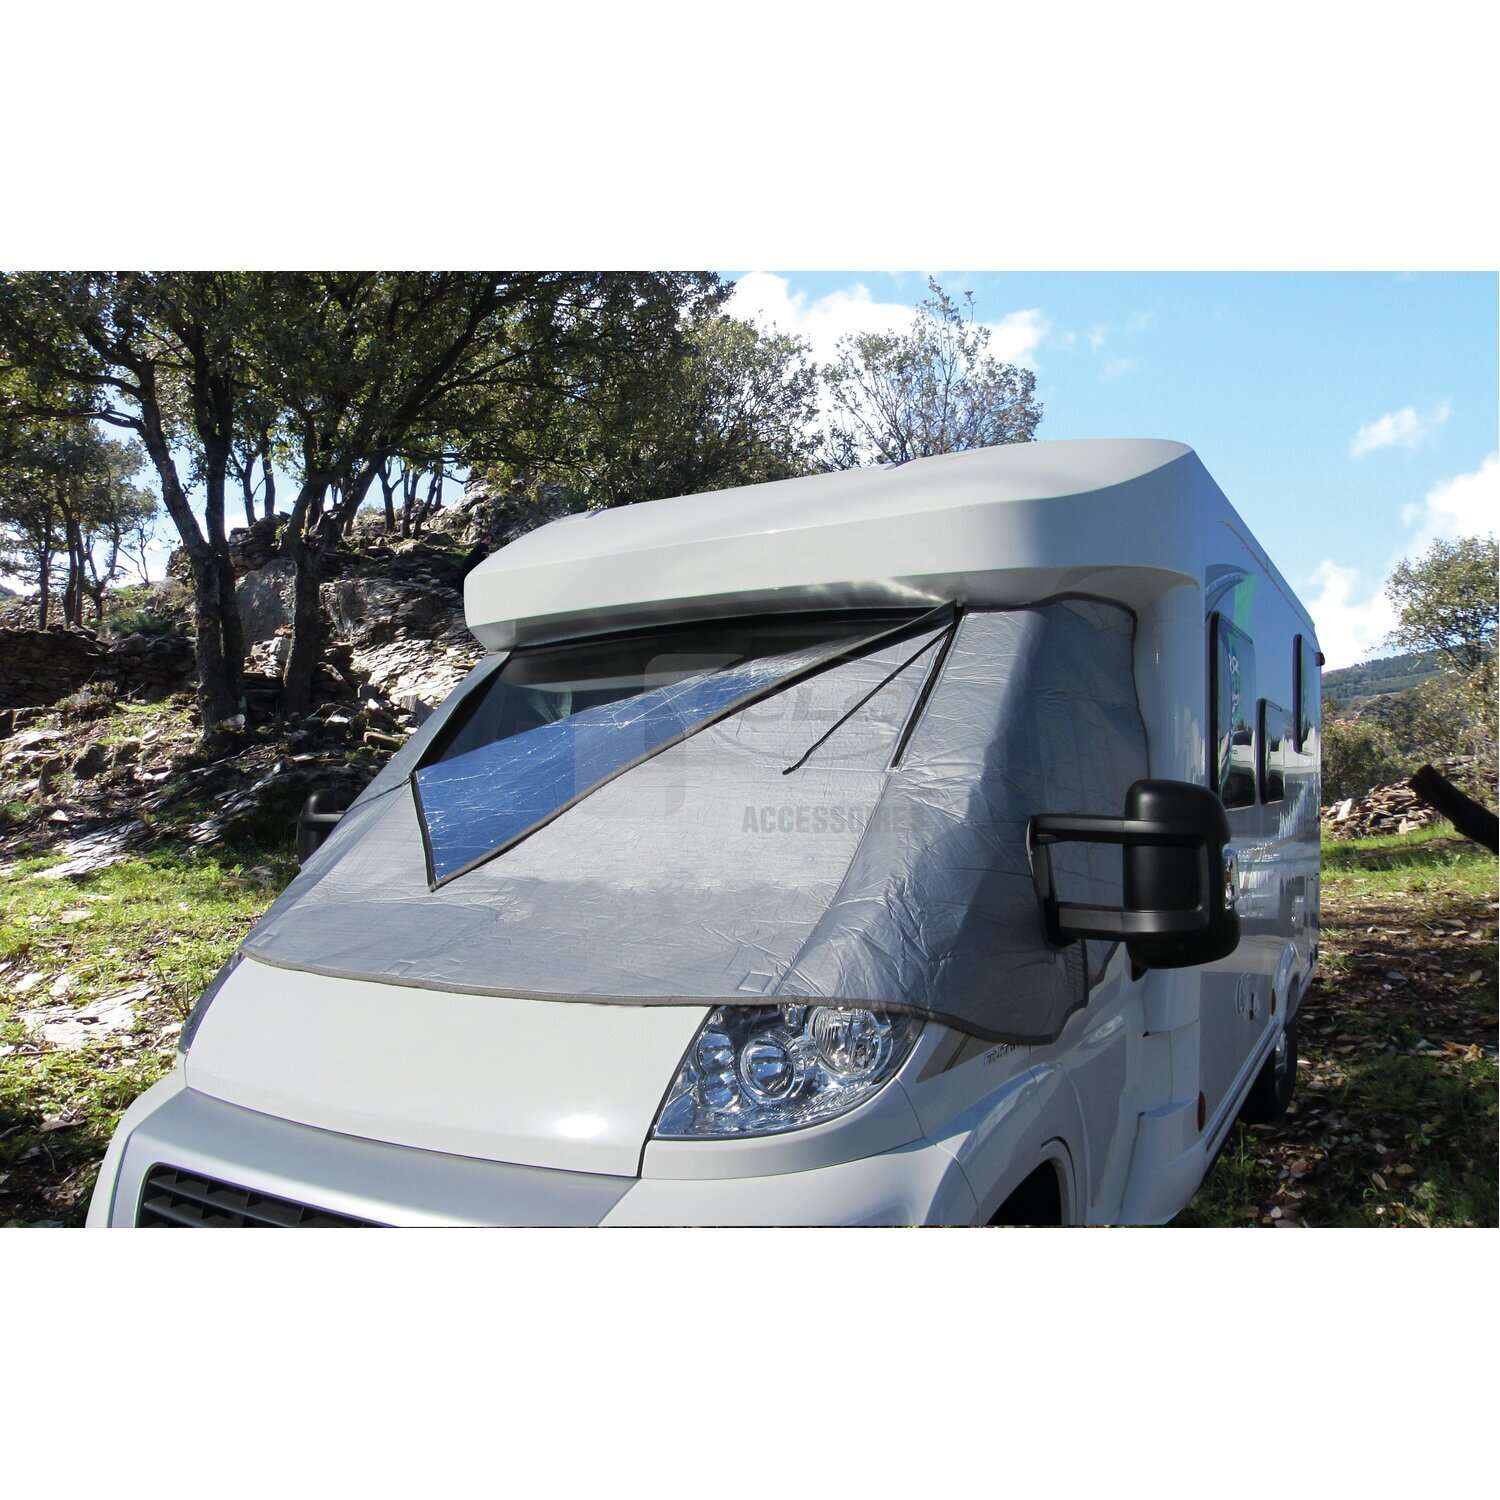 VOLET EXTÉRIEUR ISOTHERME RABATTABLE BOXER / JUMPER / DUCATO X250/X290 -  2006 > 70CPANOX250 : Accessoires camping-car : caravane - Camp' Loisirs  Diffusion